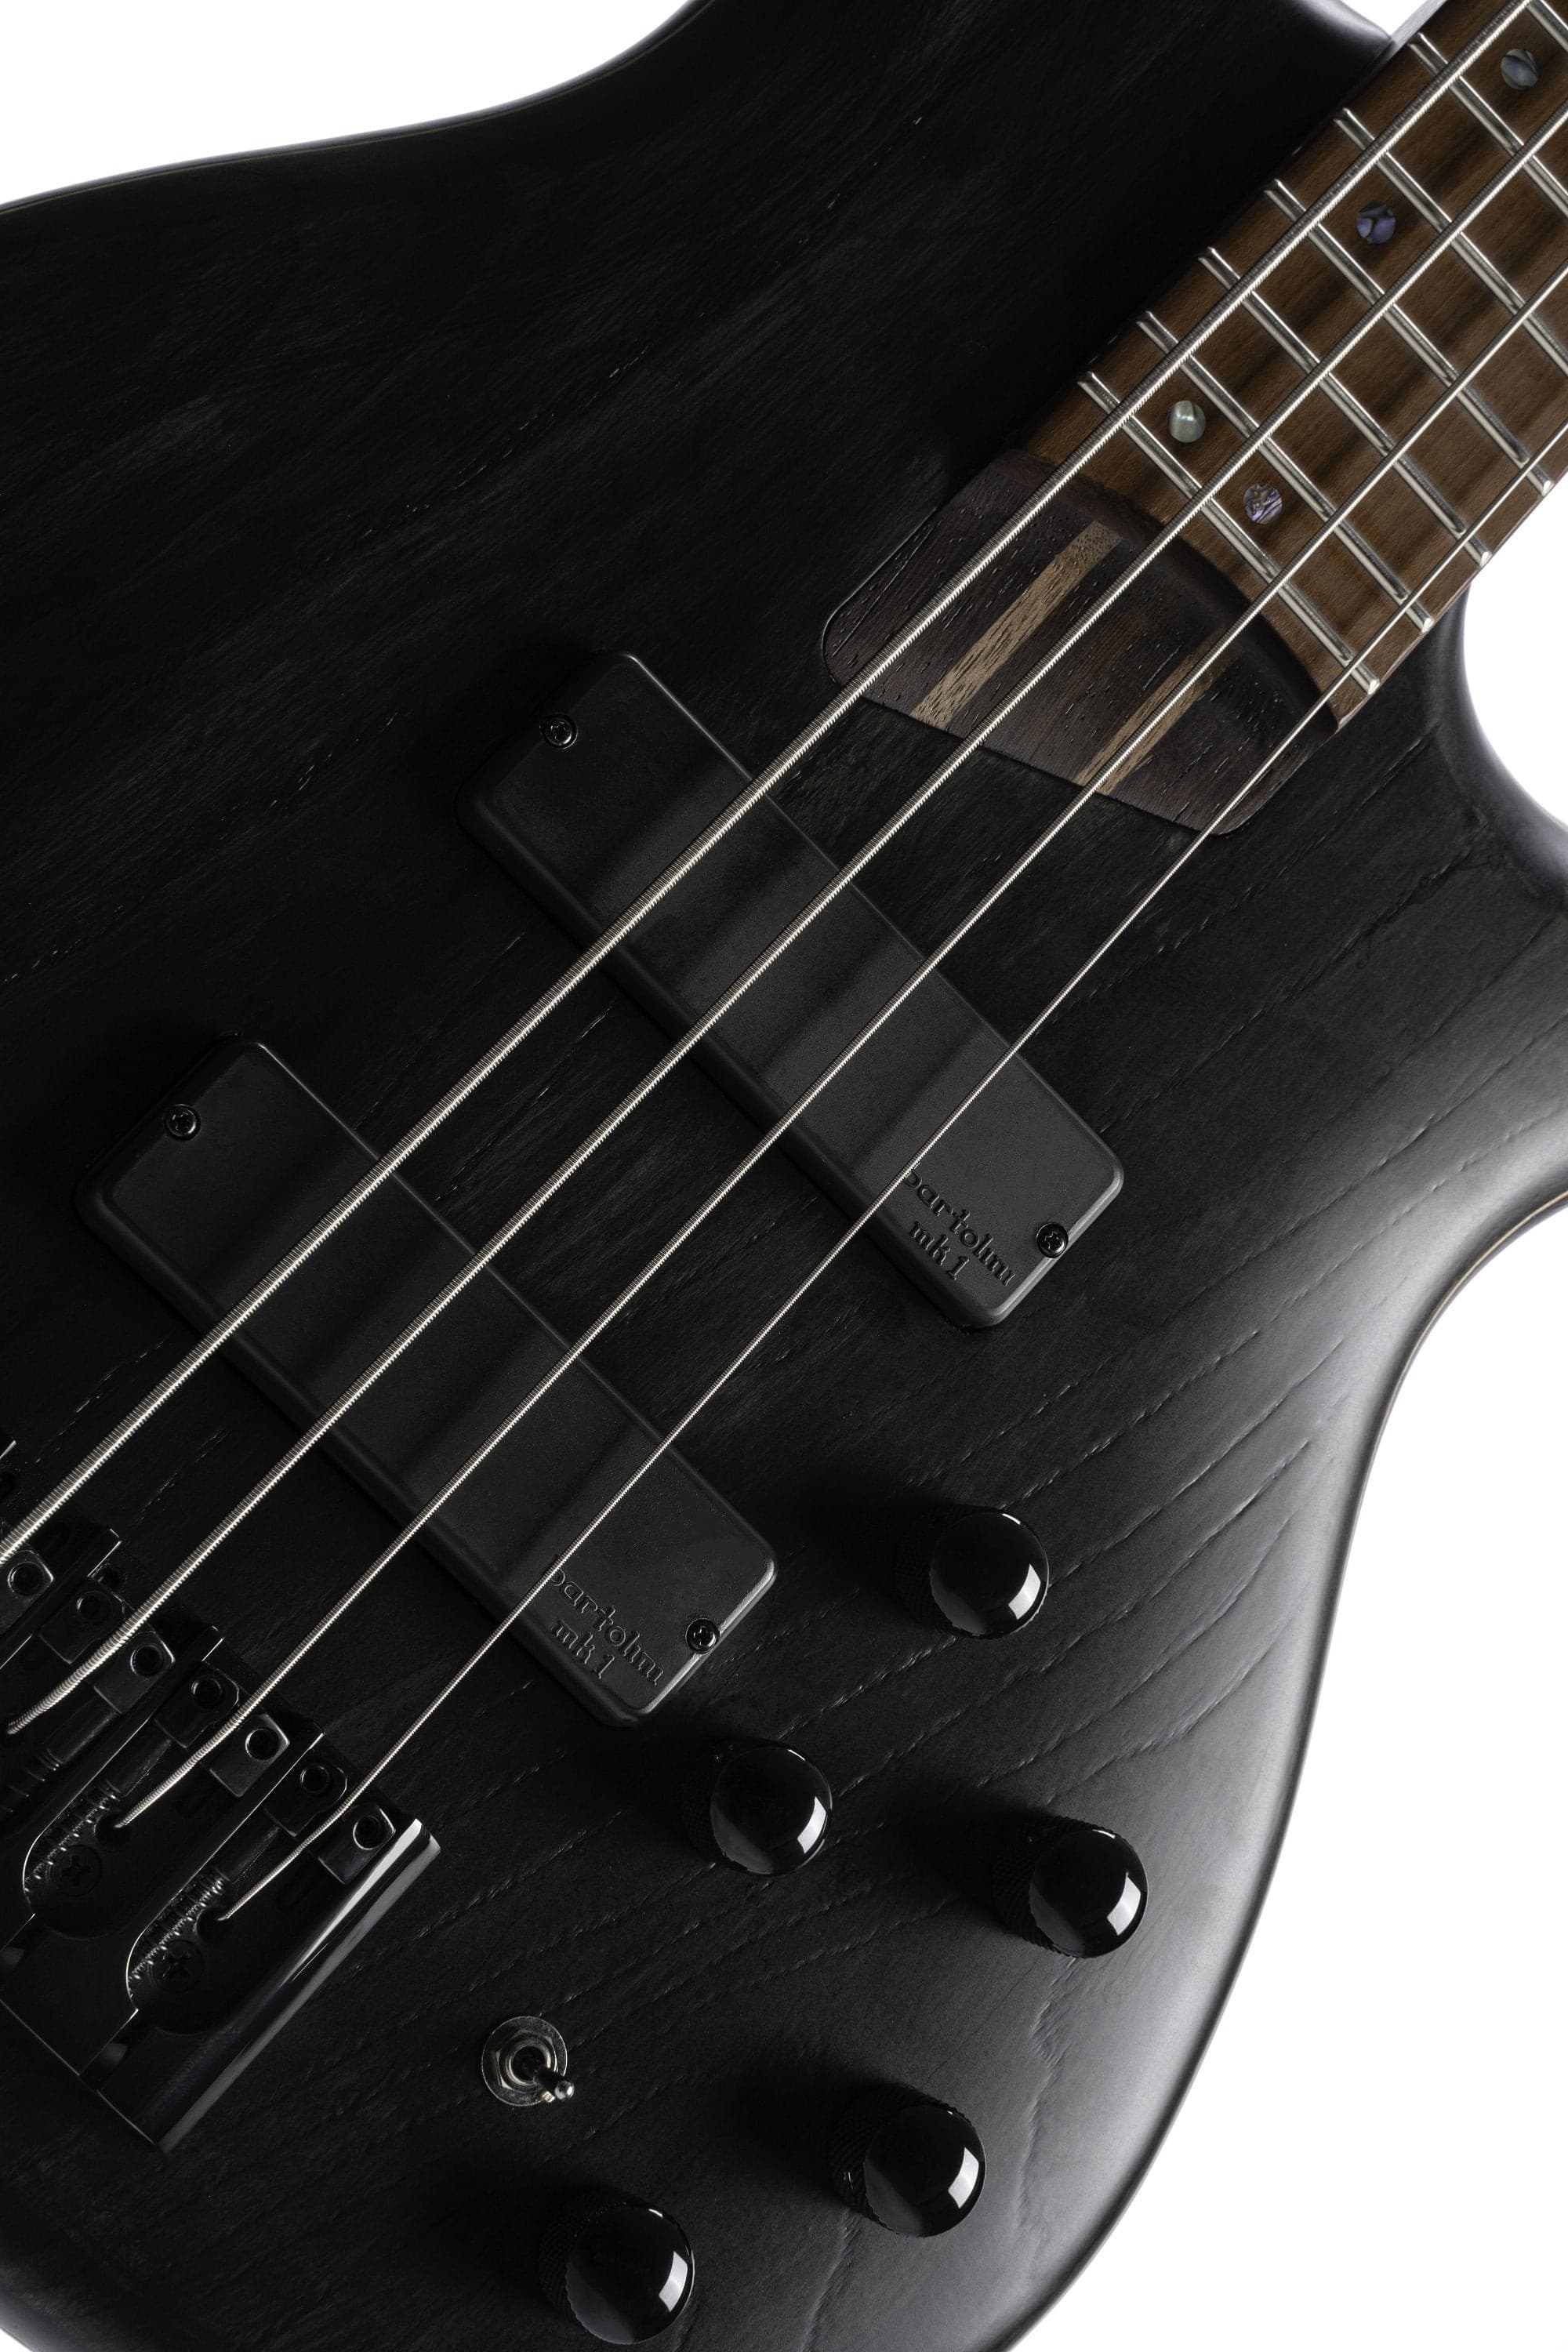 Cort B4 Element Open Pore Trans Black, Bass Guitar for sale at Richards Guitars.